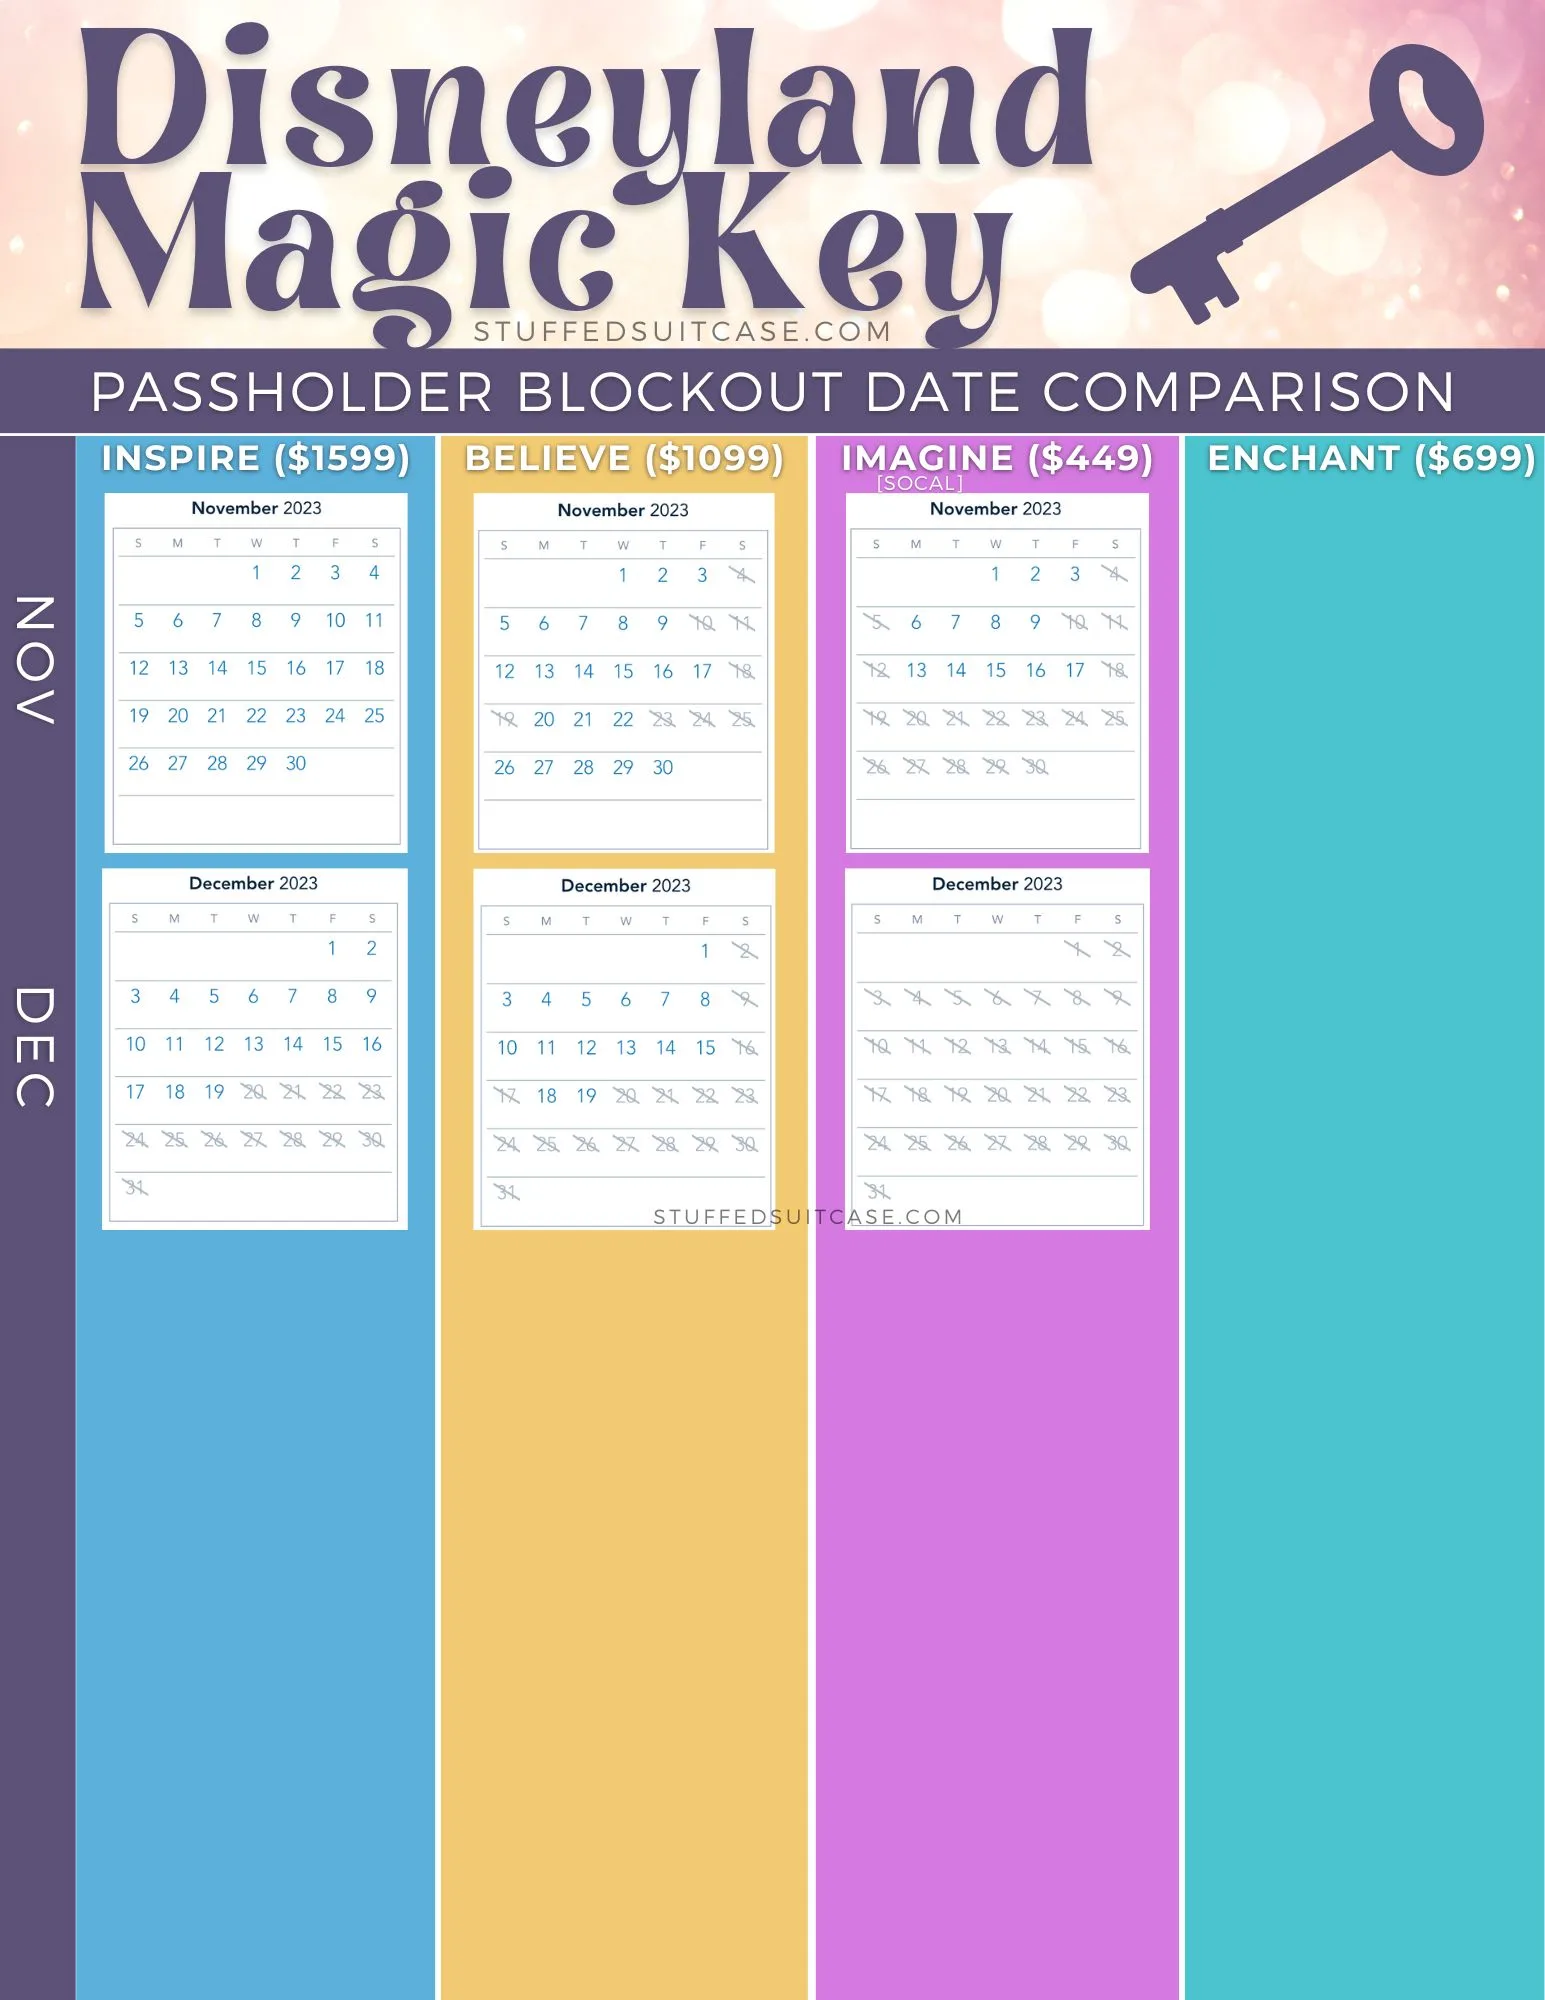 Magic Key Blockout Date Calendar Comparison November 2023 - December 2023